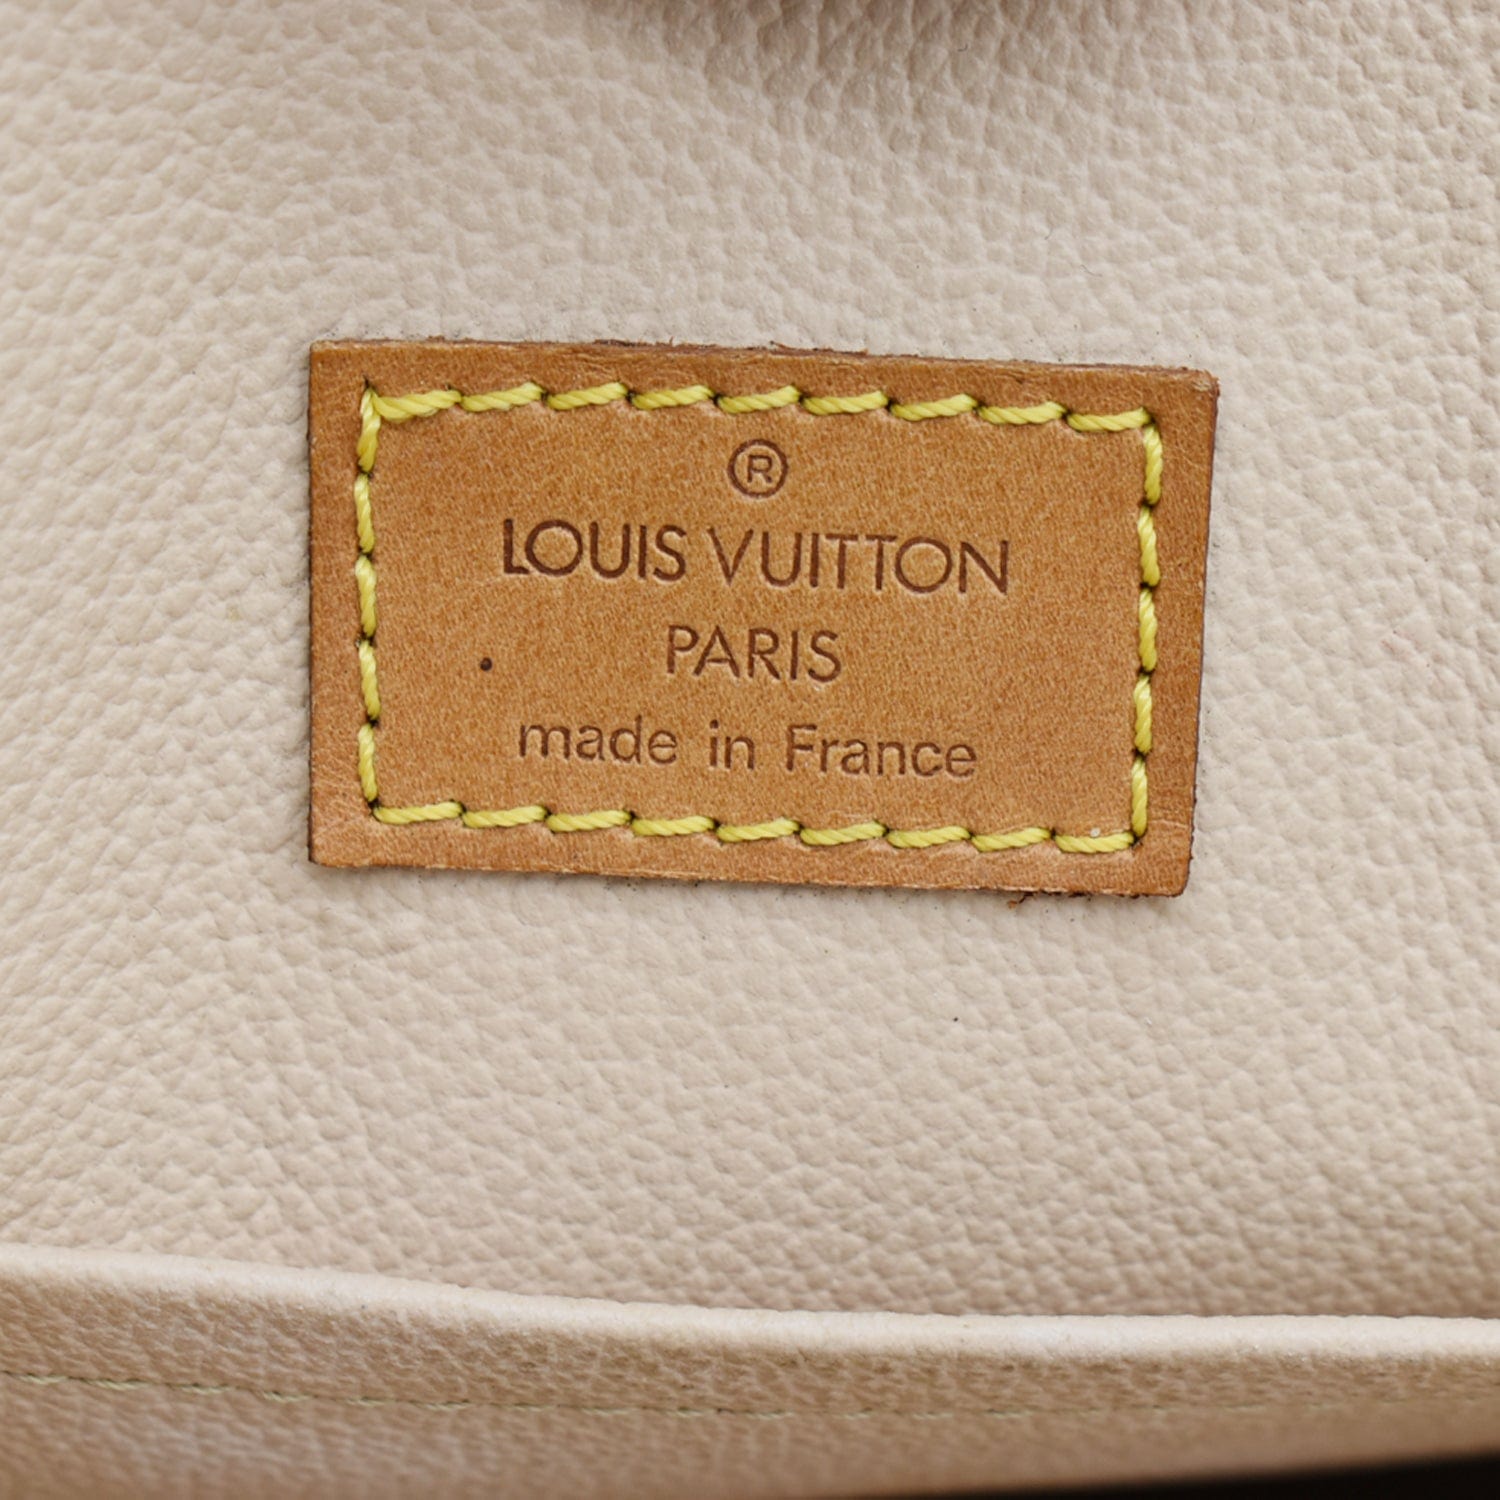 Louis+Vuitton+Sac+Plat+Tote+Medium+Brown+Canvas for sale online